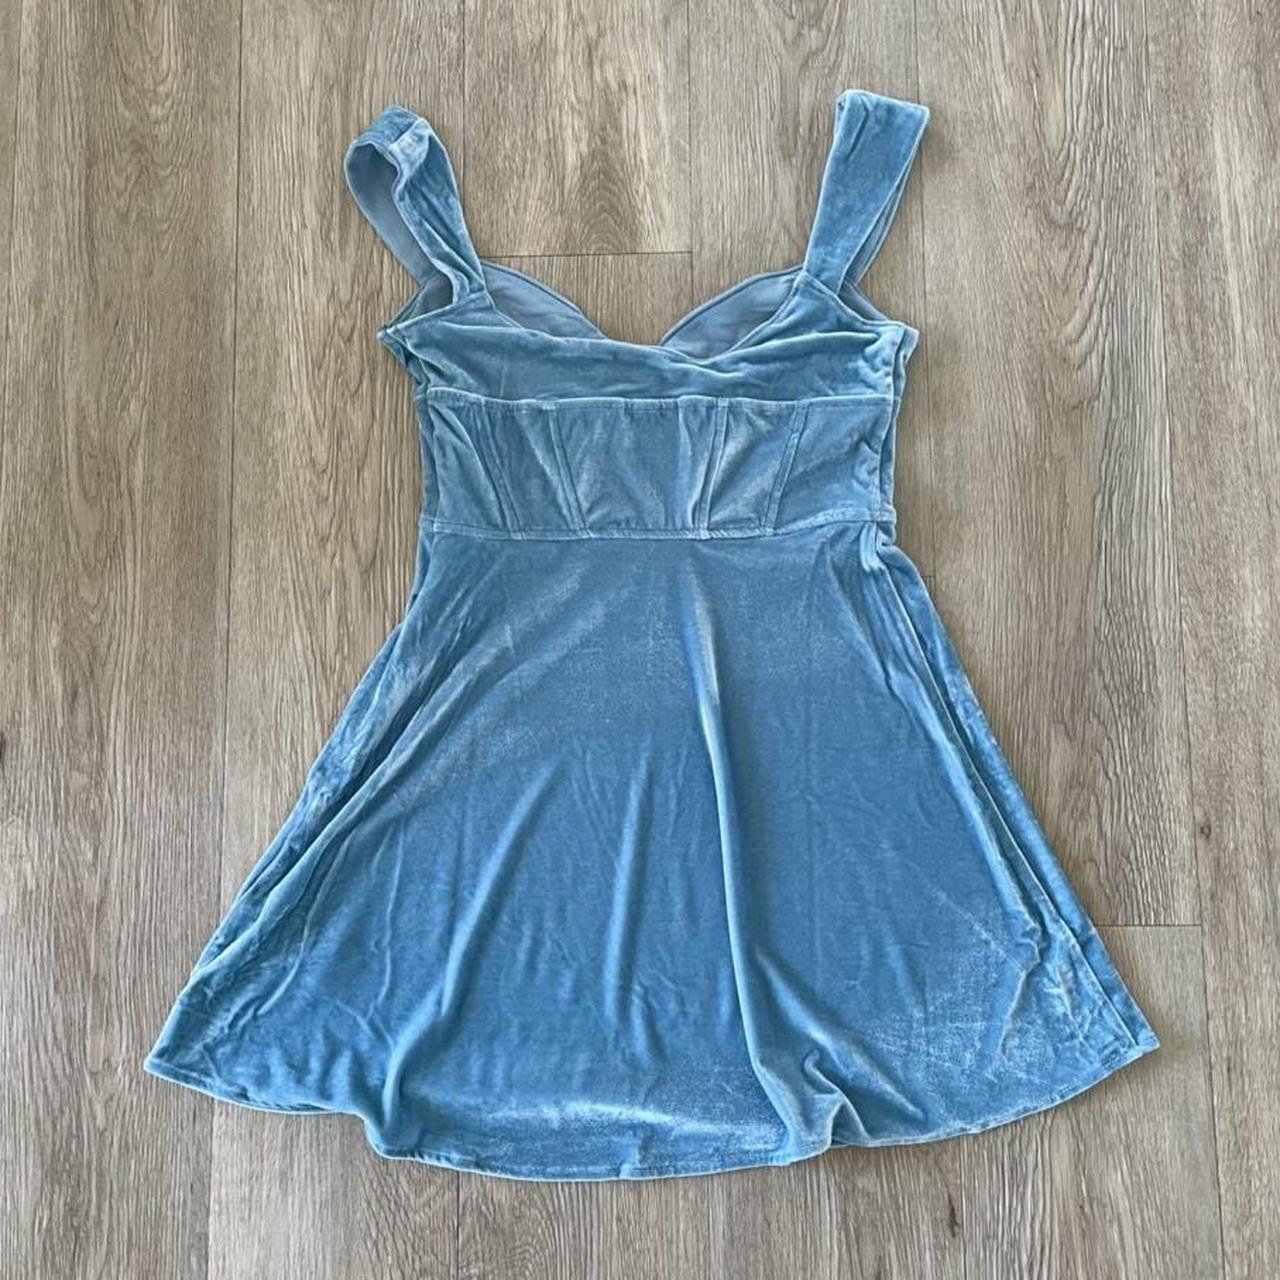 Urban Outfitters Blue Velvet Corset-Style Dress in... - Depop